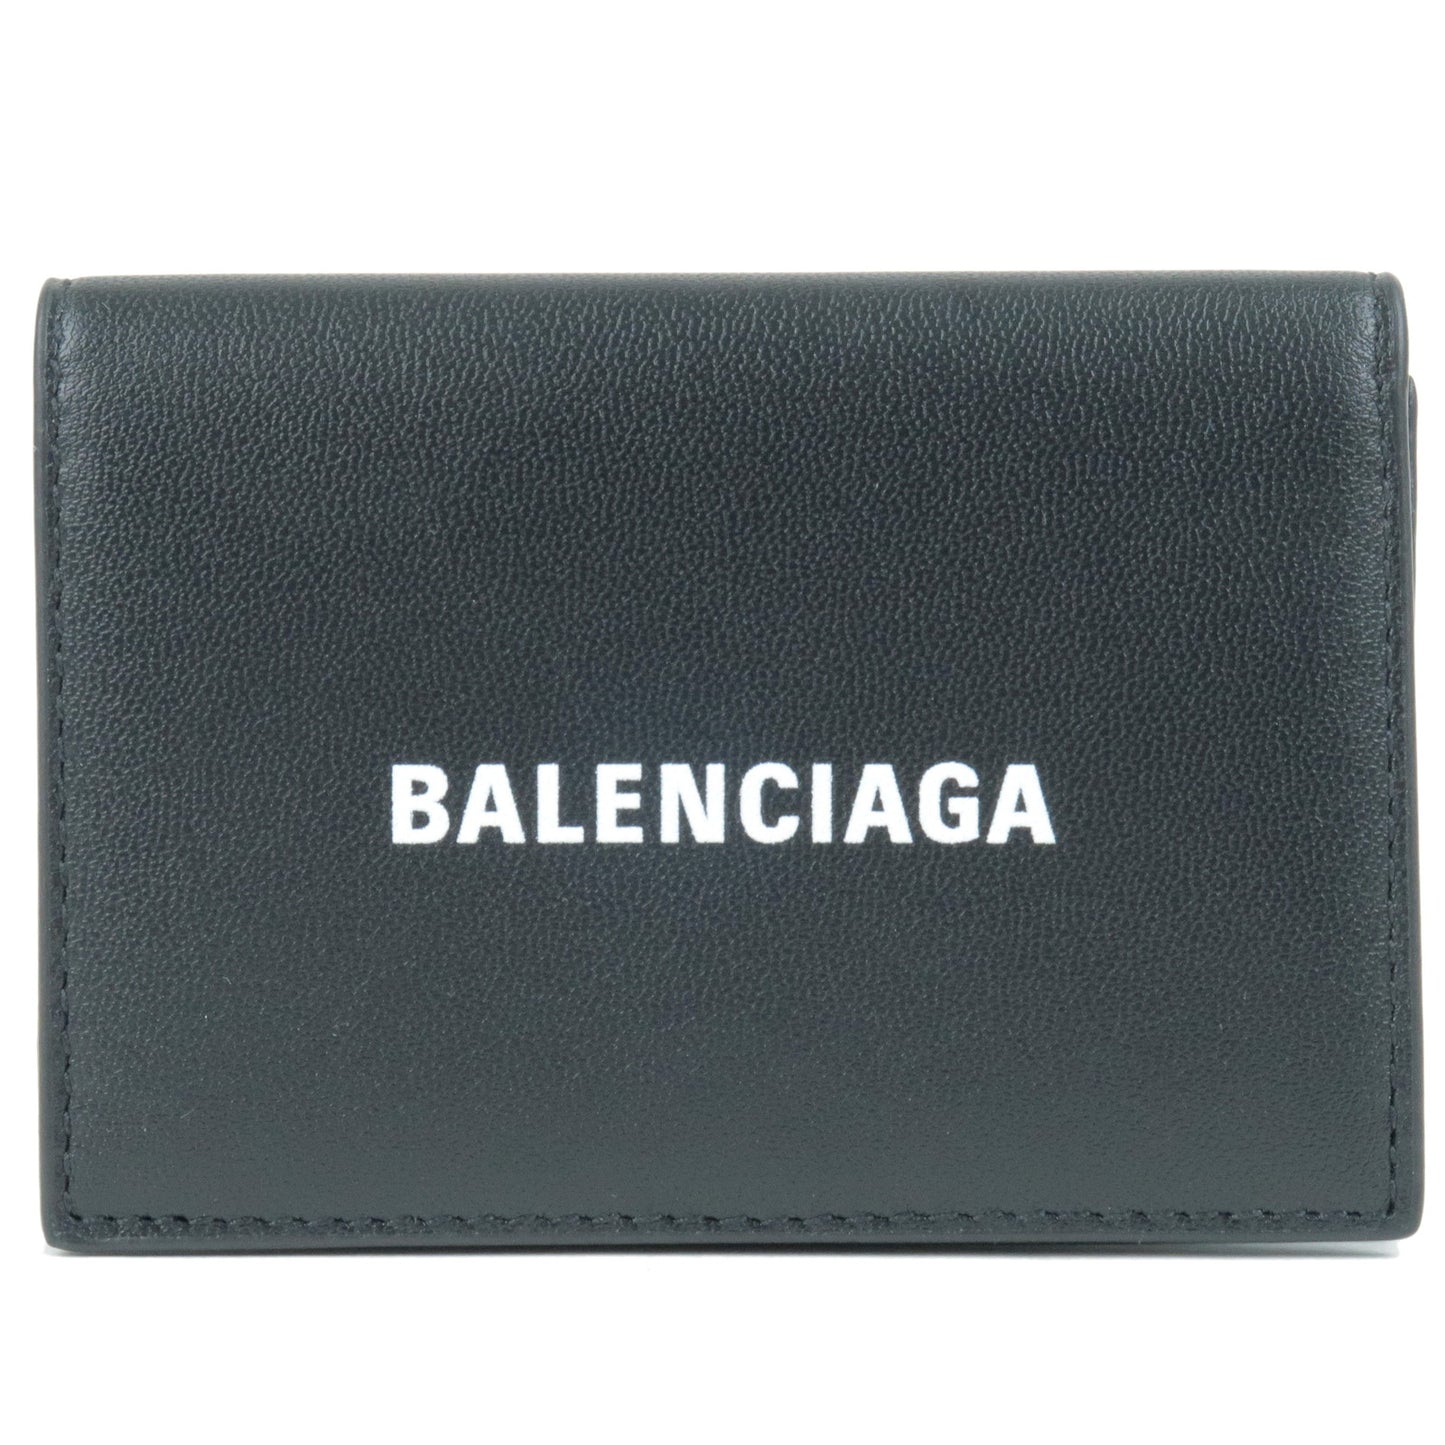 BALENCIAGA-Leather-Cash-Mini-Wallet-Tri-Fold-Wallet-Black-594312